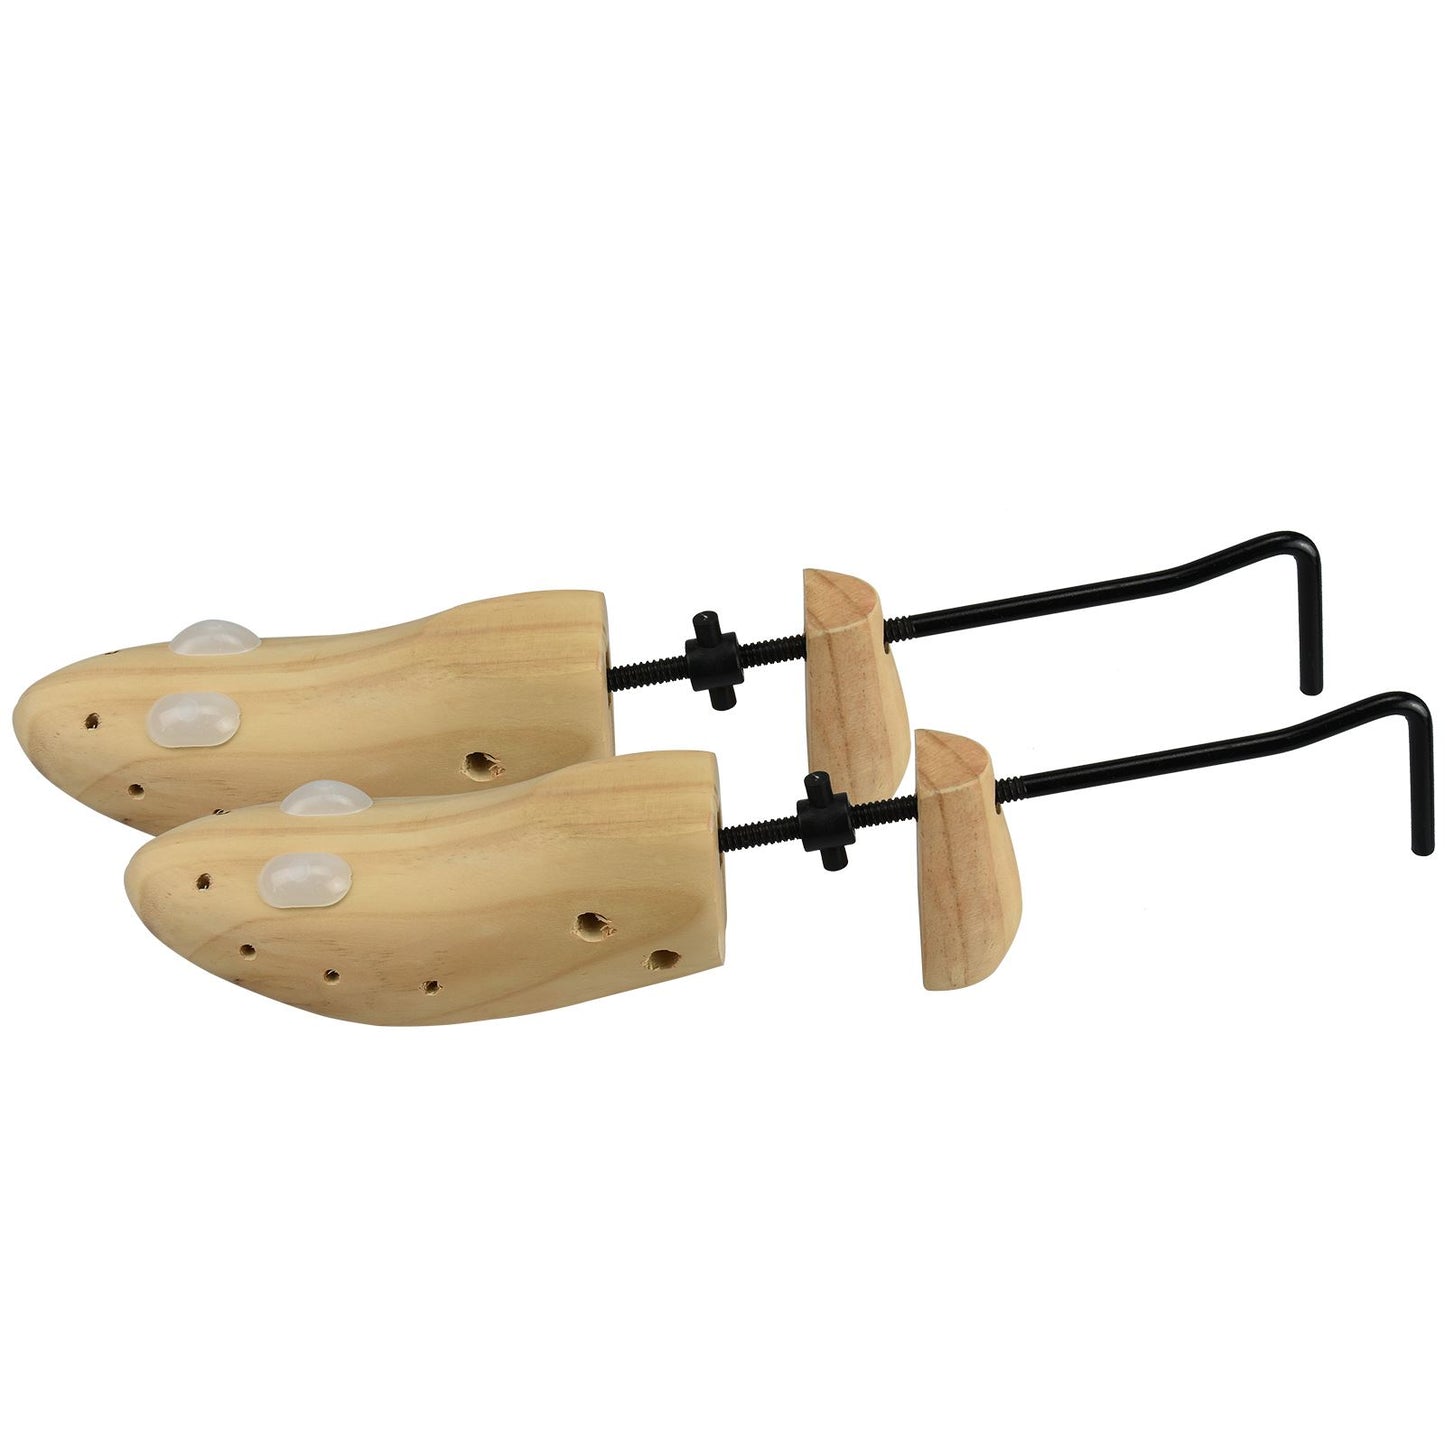 Wooden Shoe Stretcher Ladies Shoe 3-8 UK Size